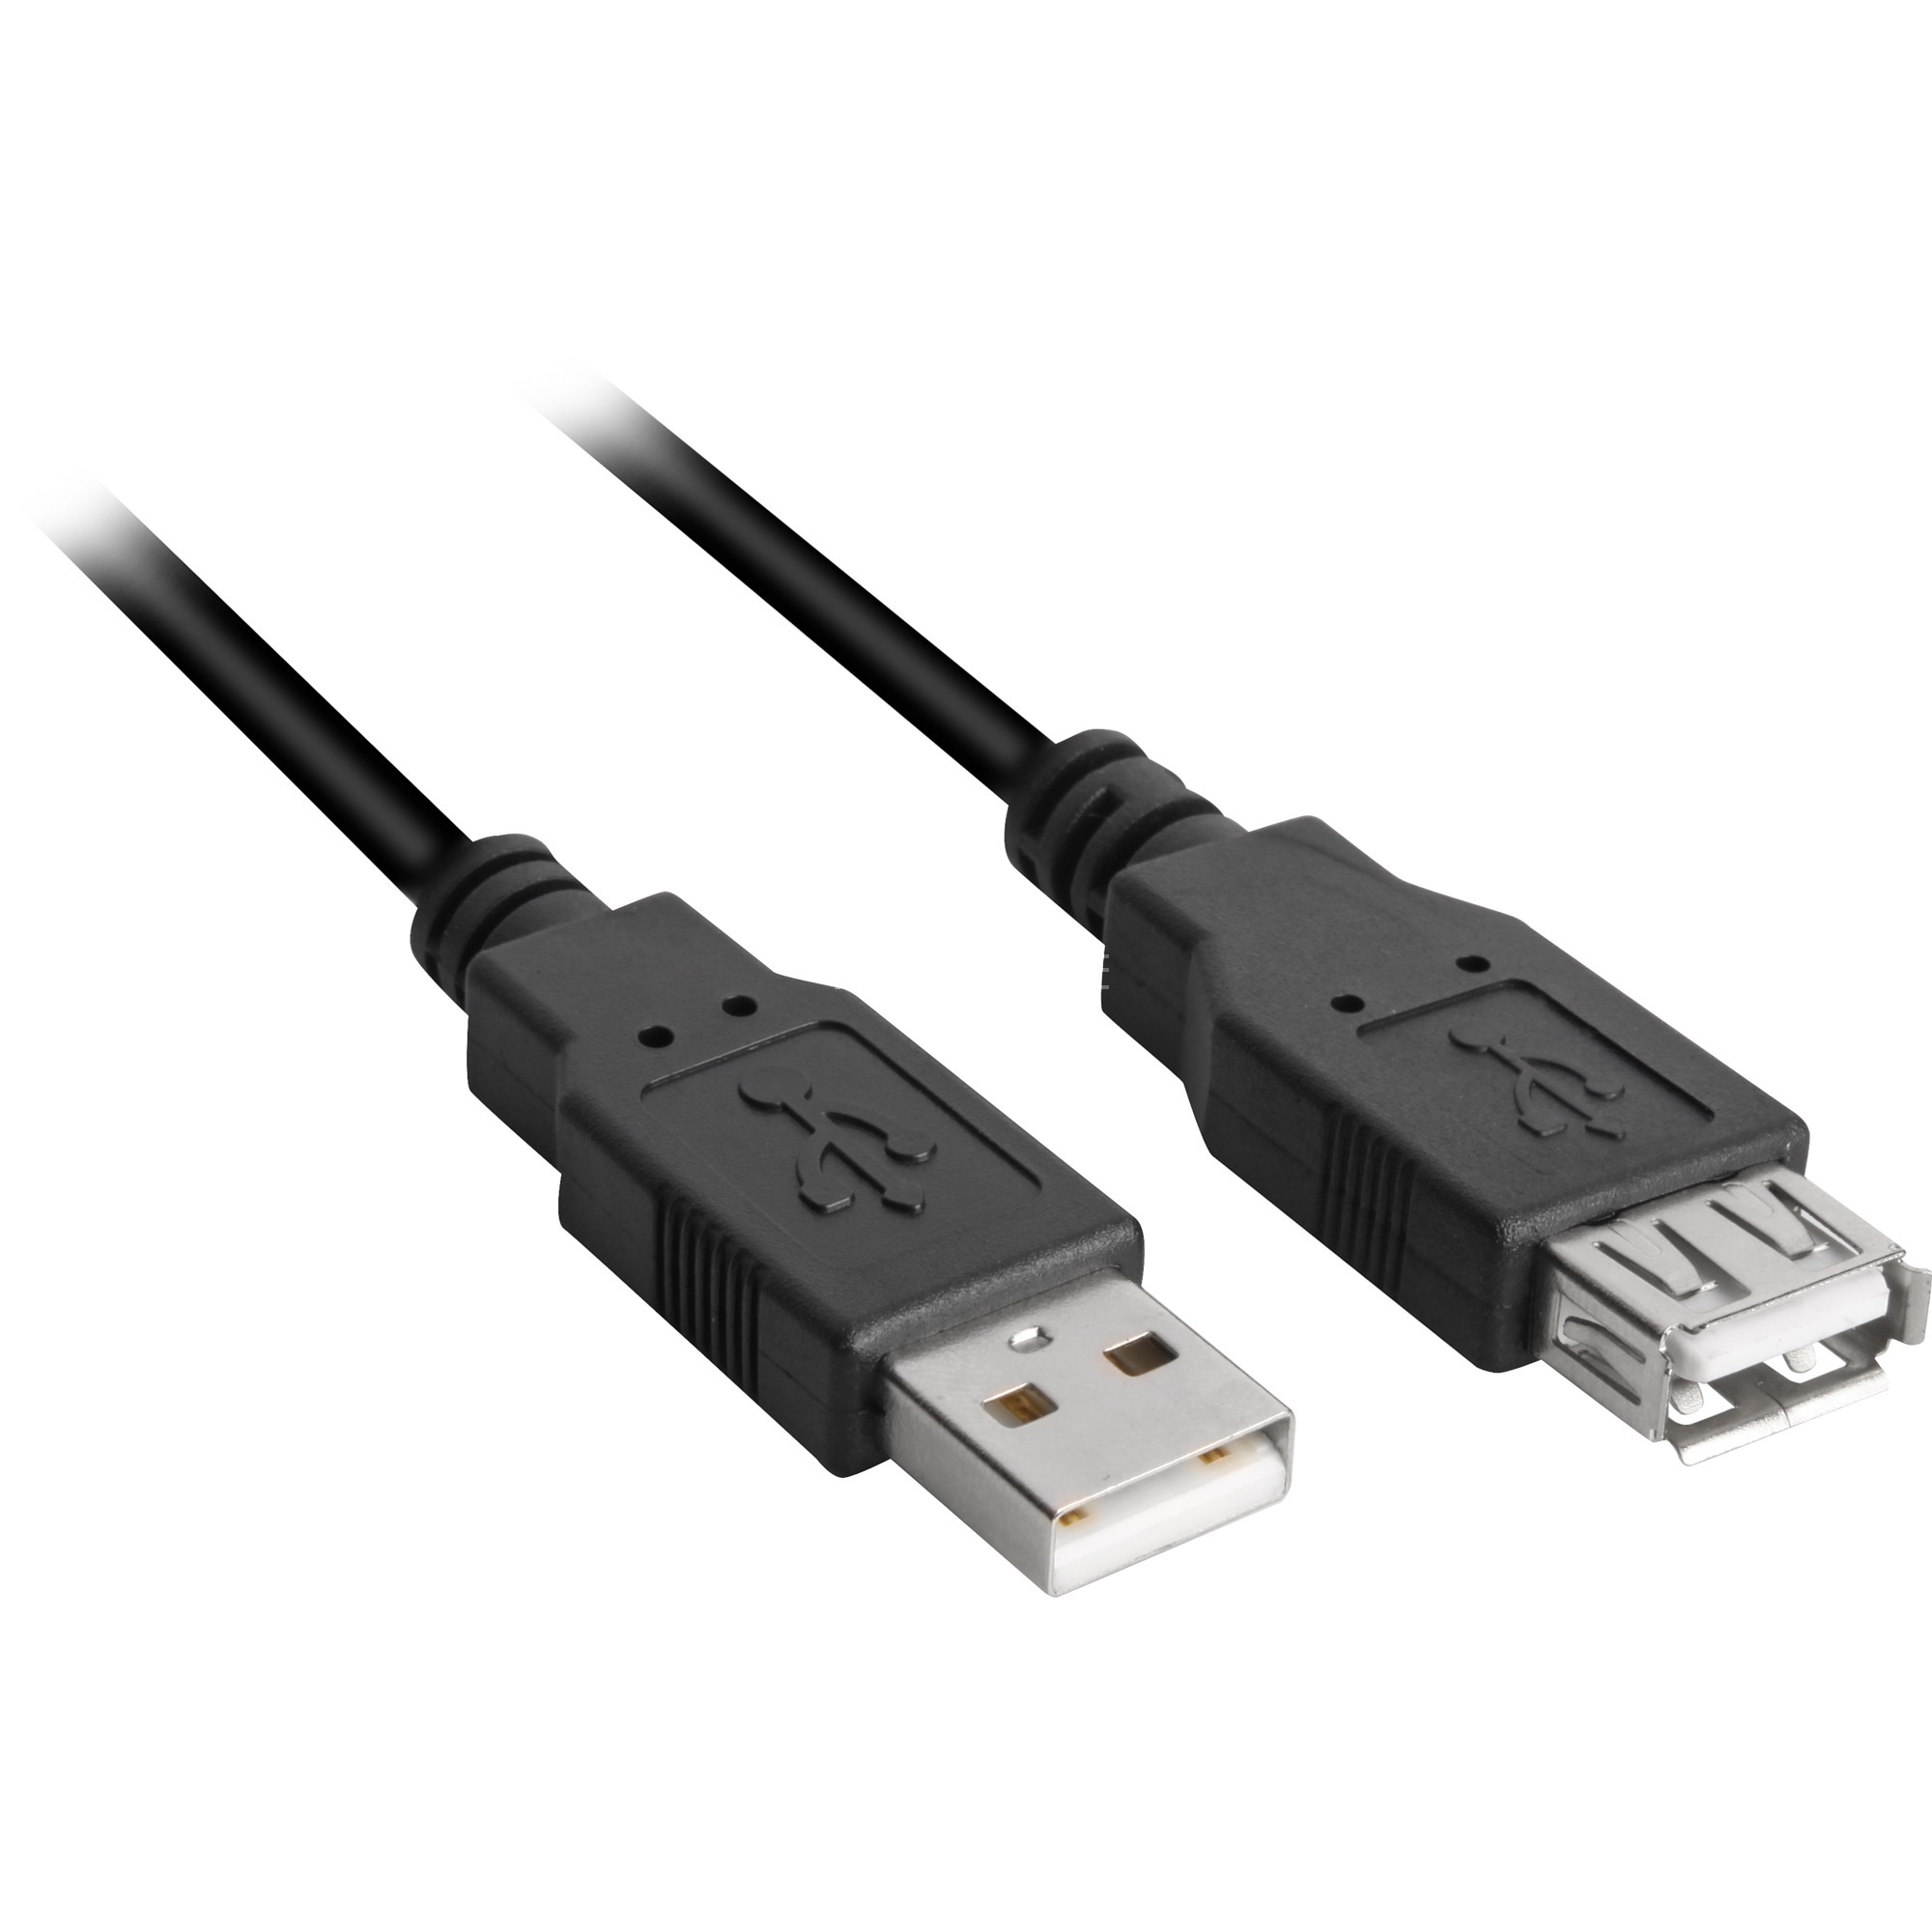 Image of Alternate - Kabel USB 2.0-Verlängerung, Verlängerungskabel online einkaufen bei Alternate